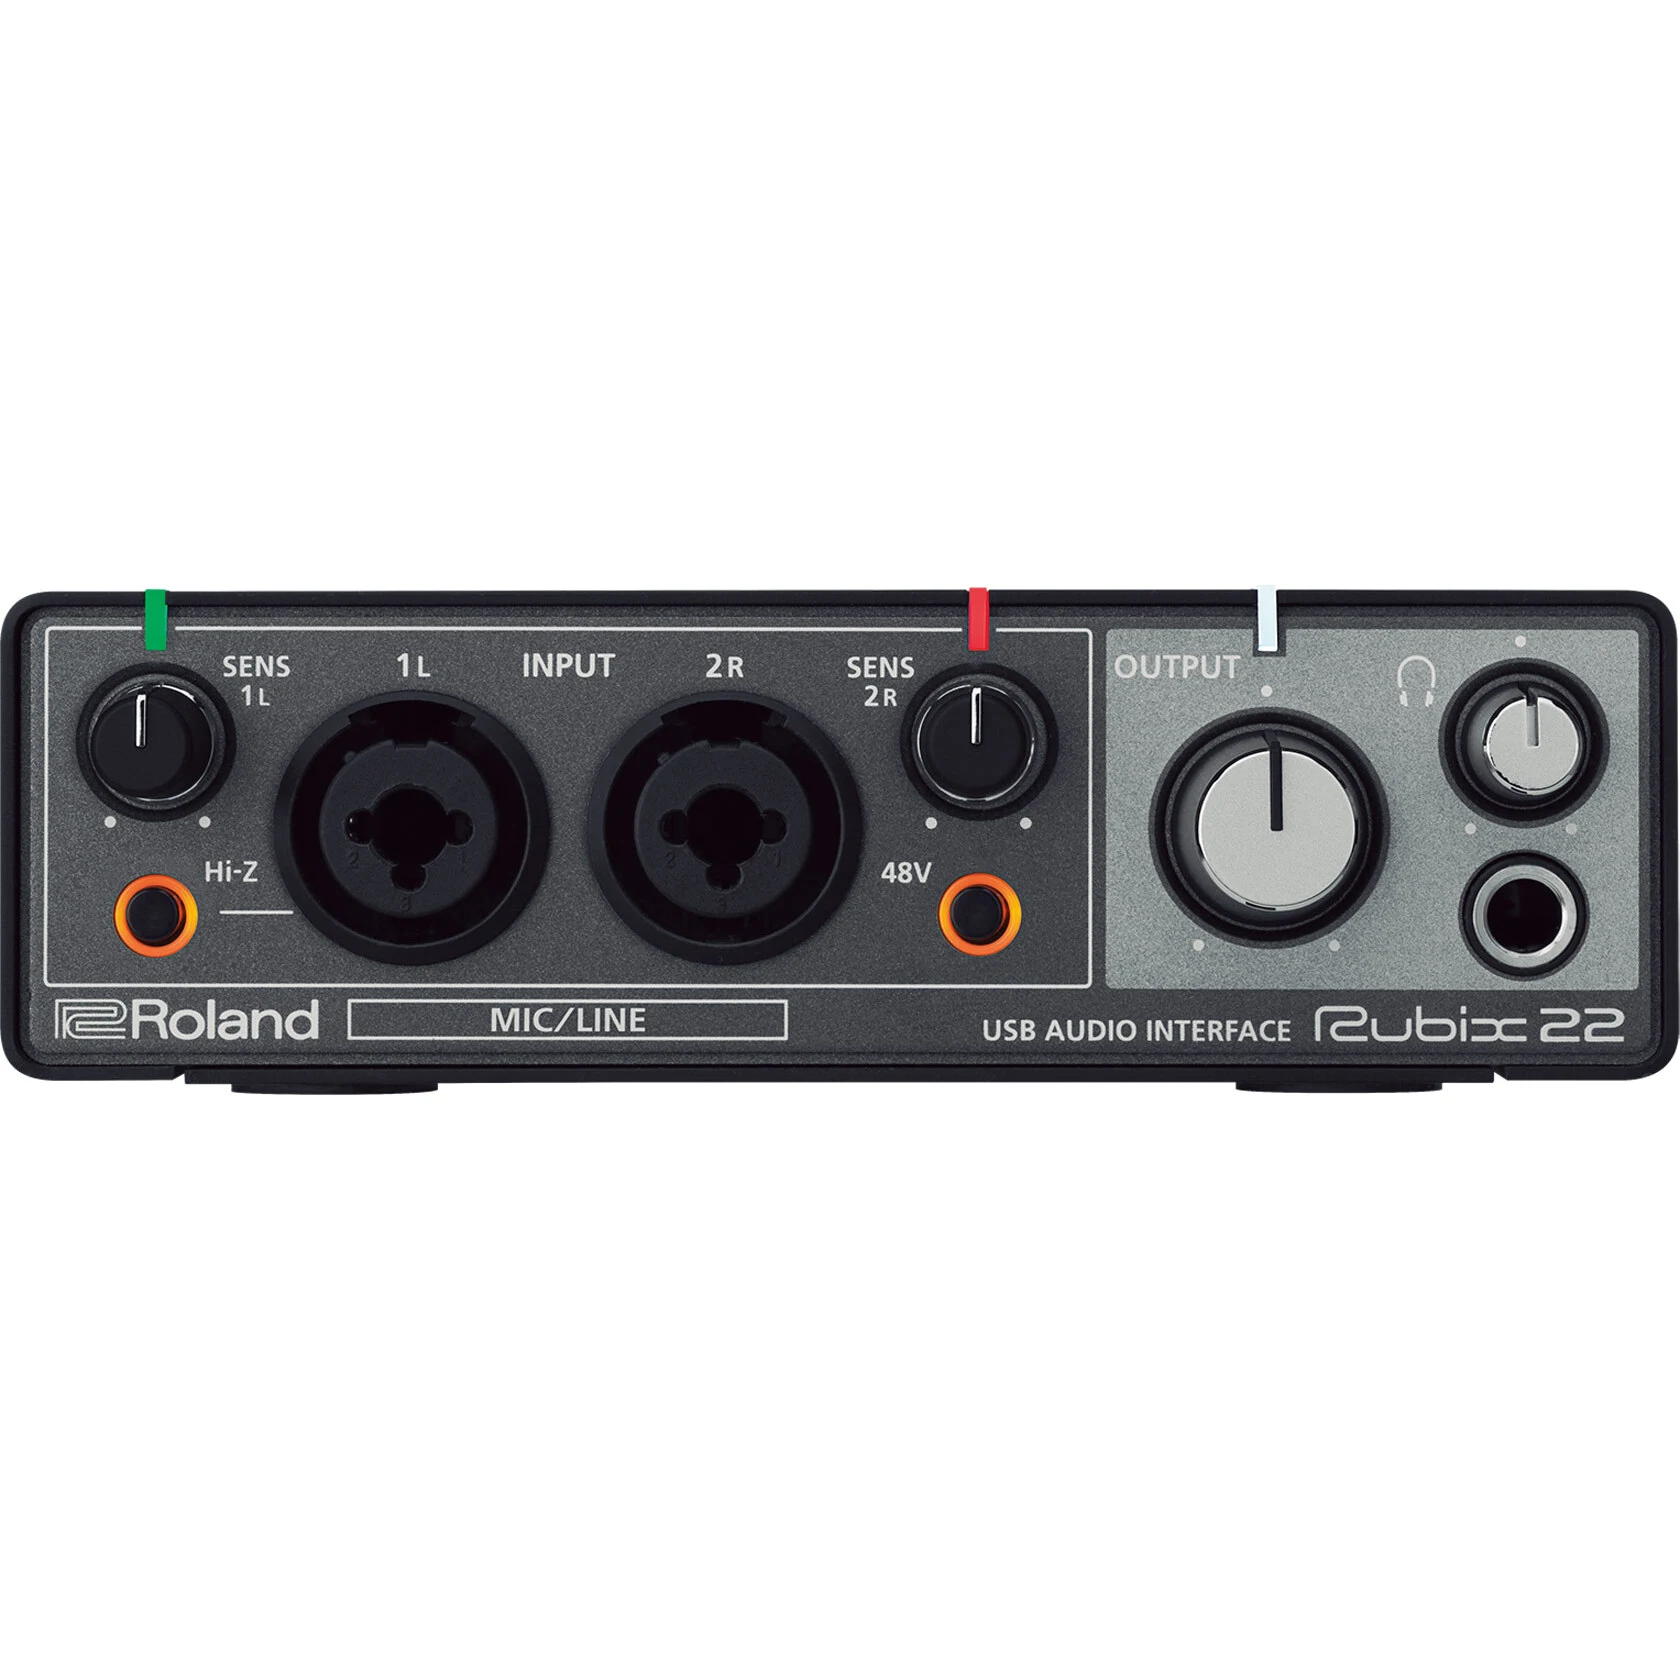 Audio Interface Roland RUBIX-22